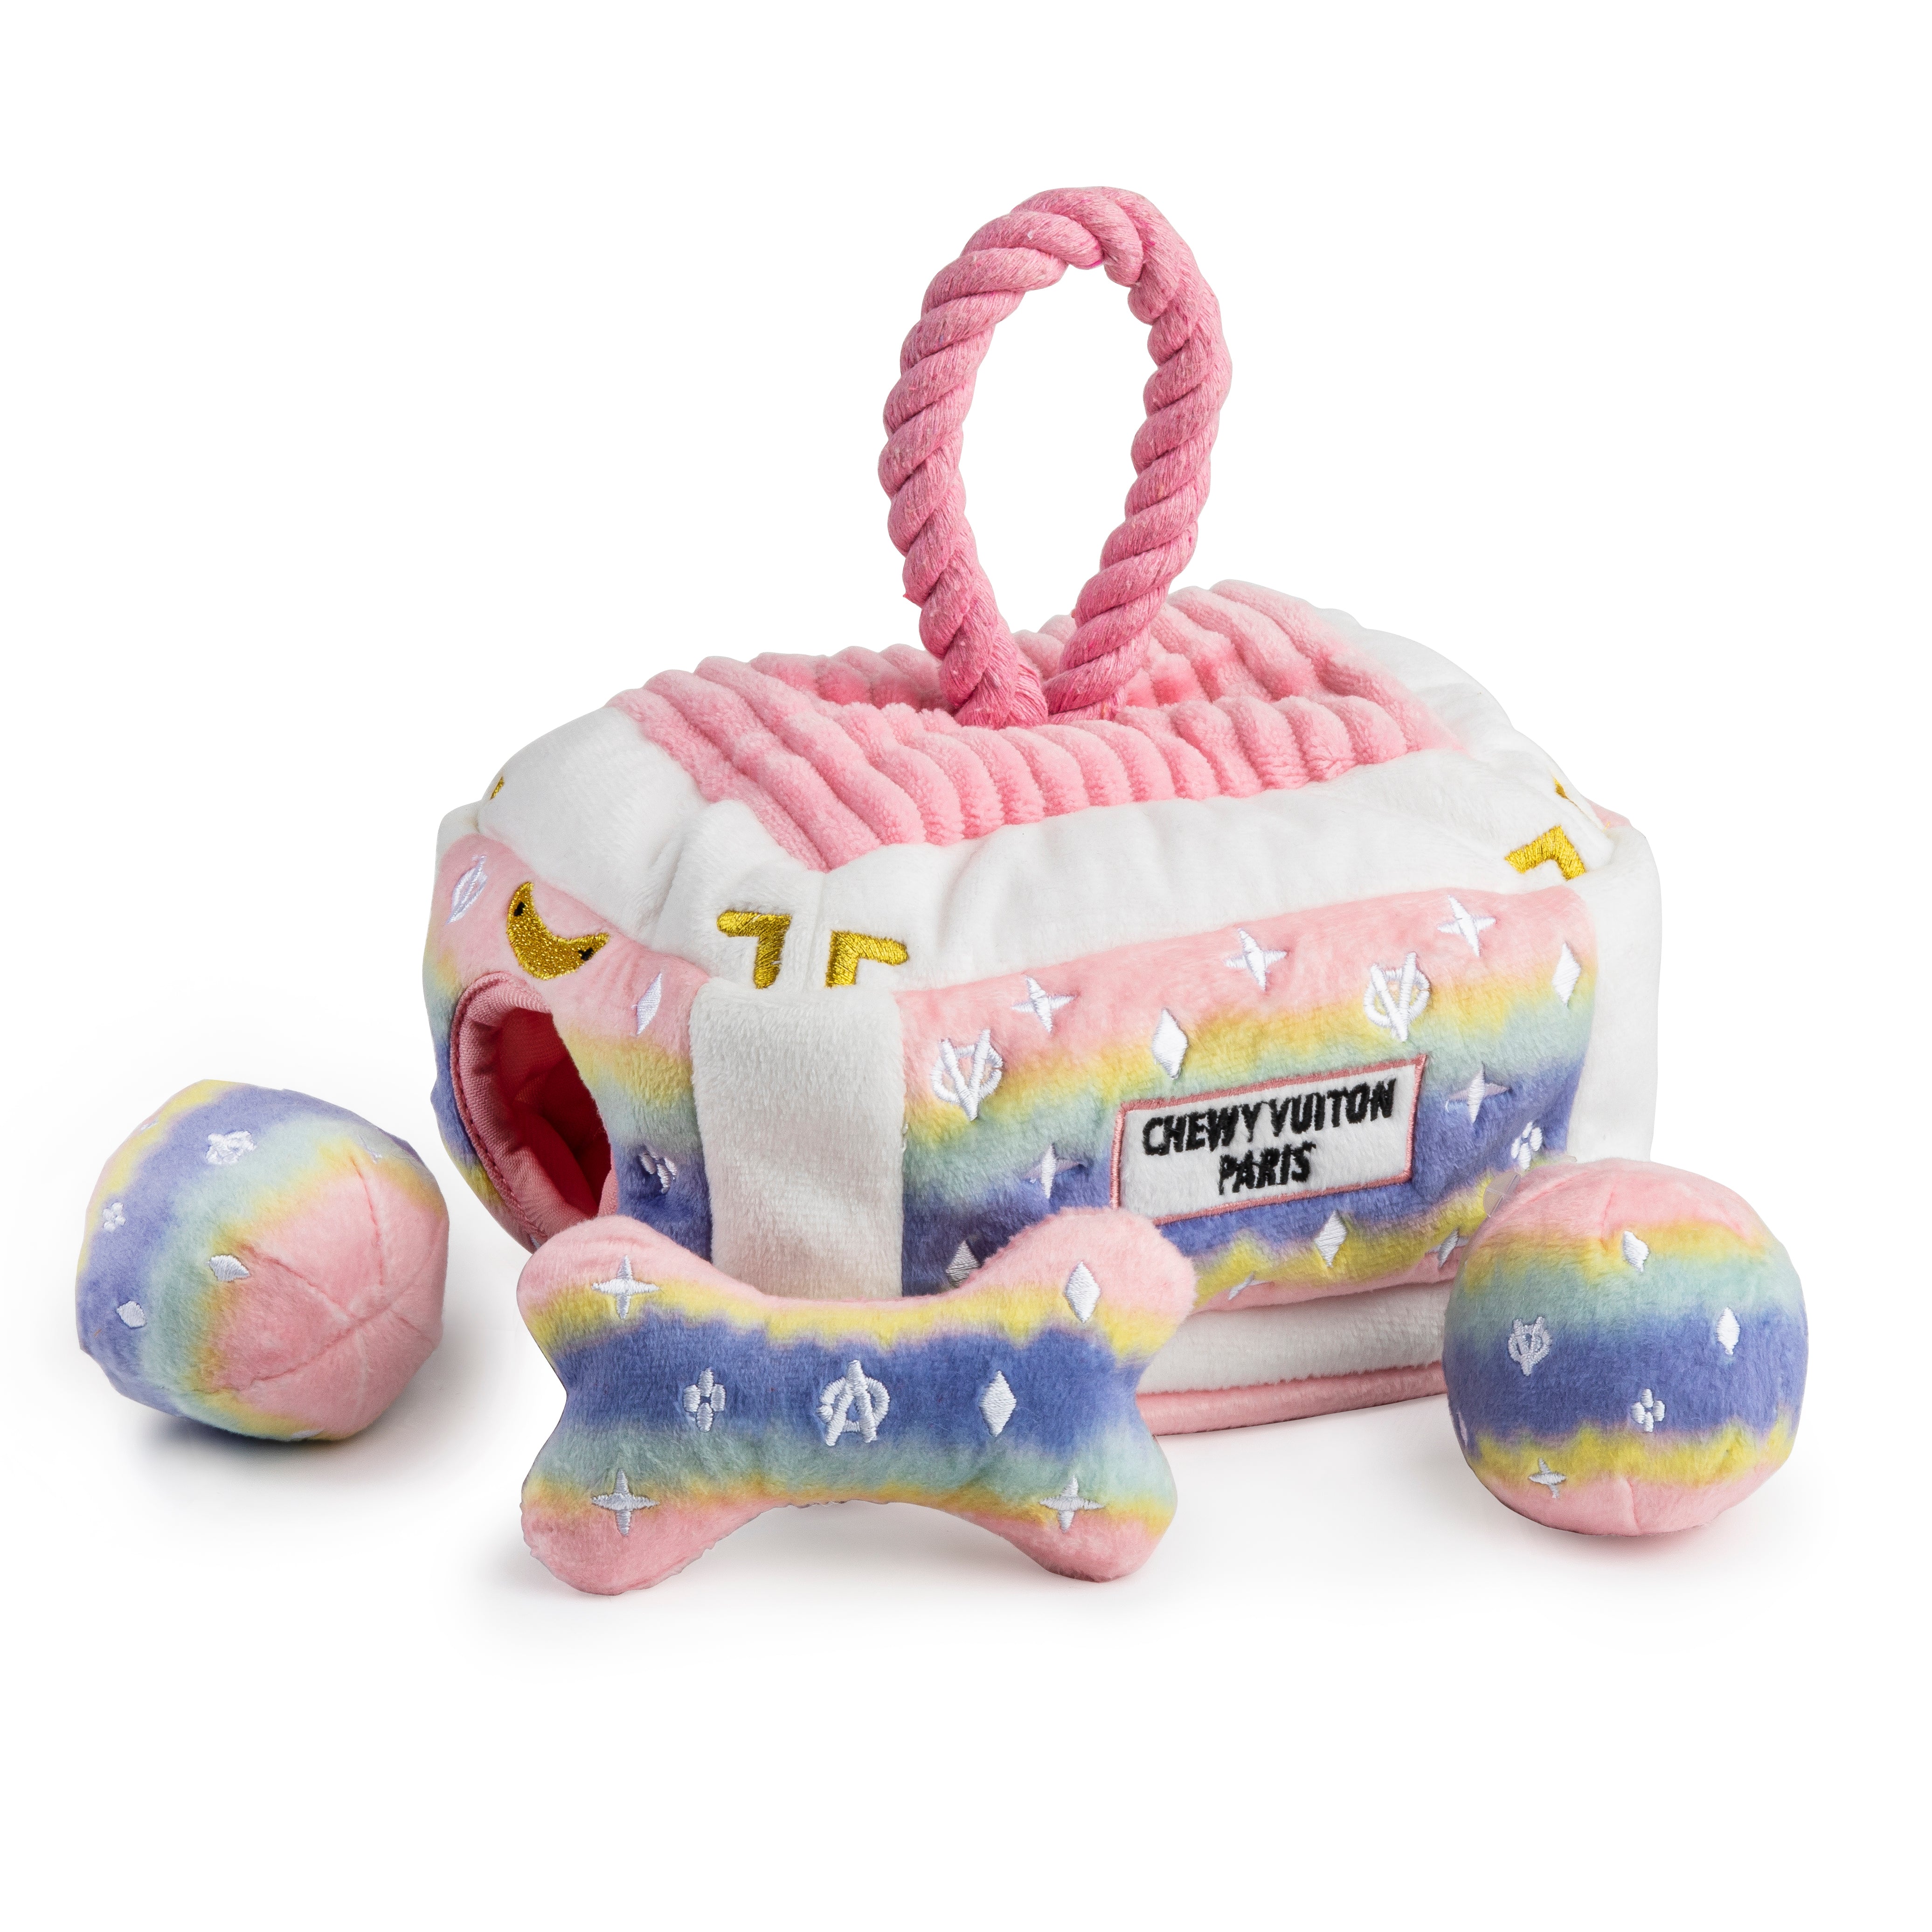 Haute Diggity Dog Chewy Vuiton Pink Ombre Handbag Plush Dog Toy